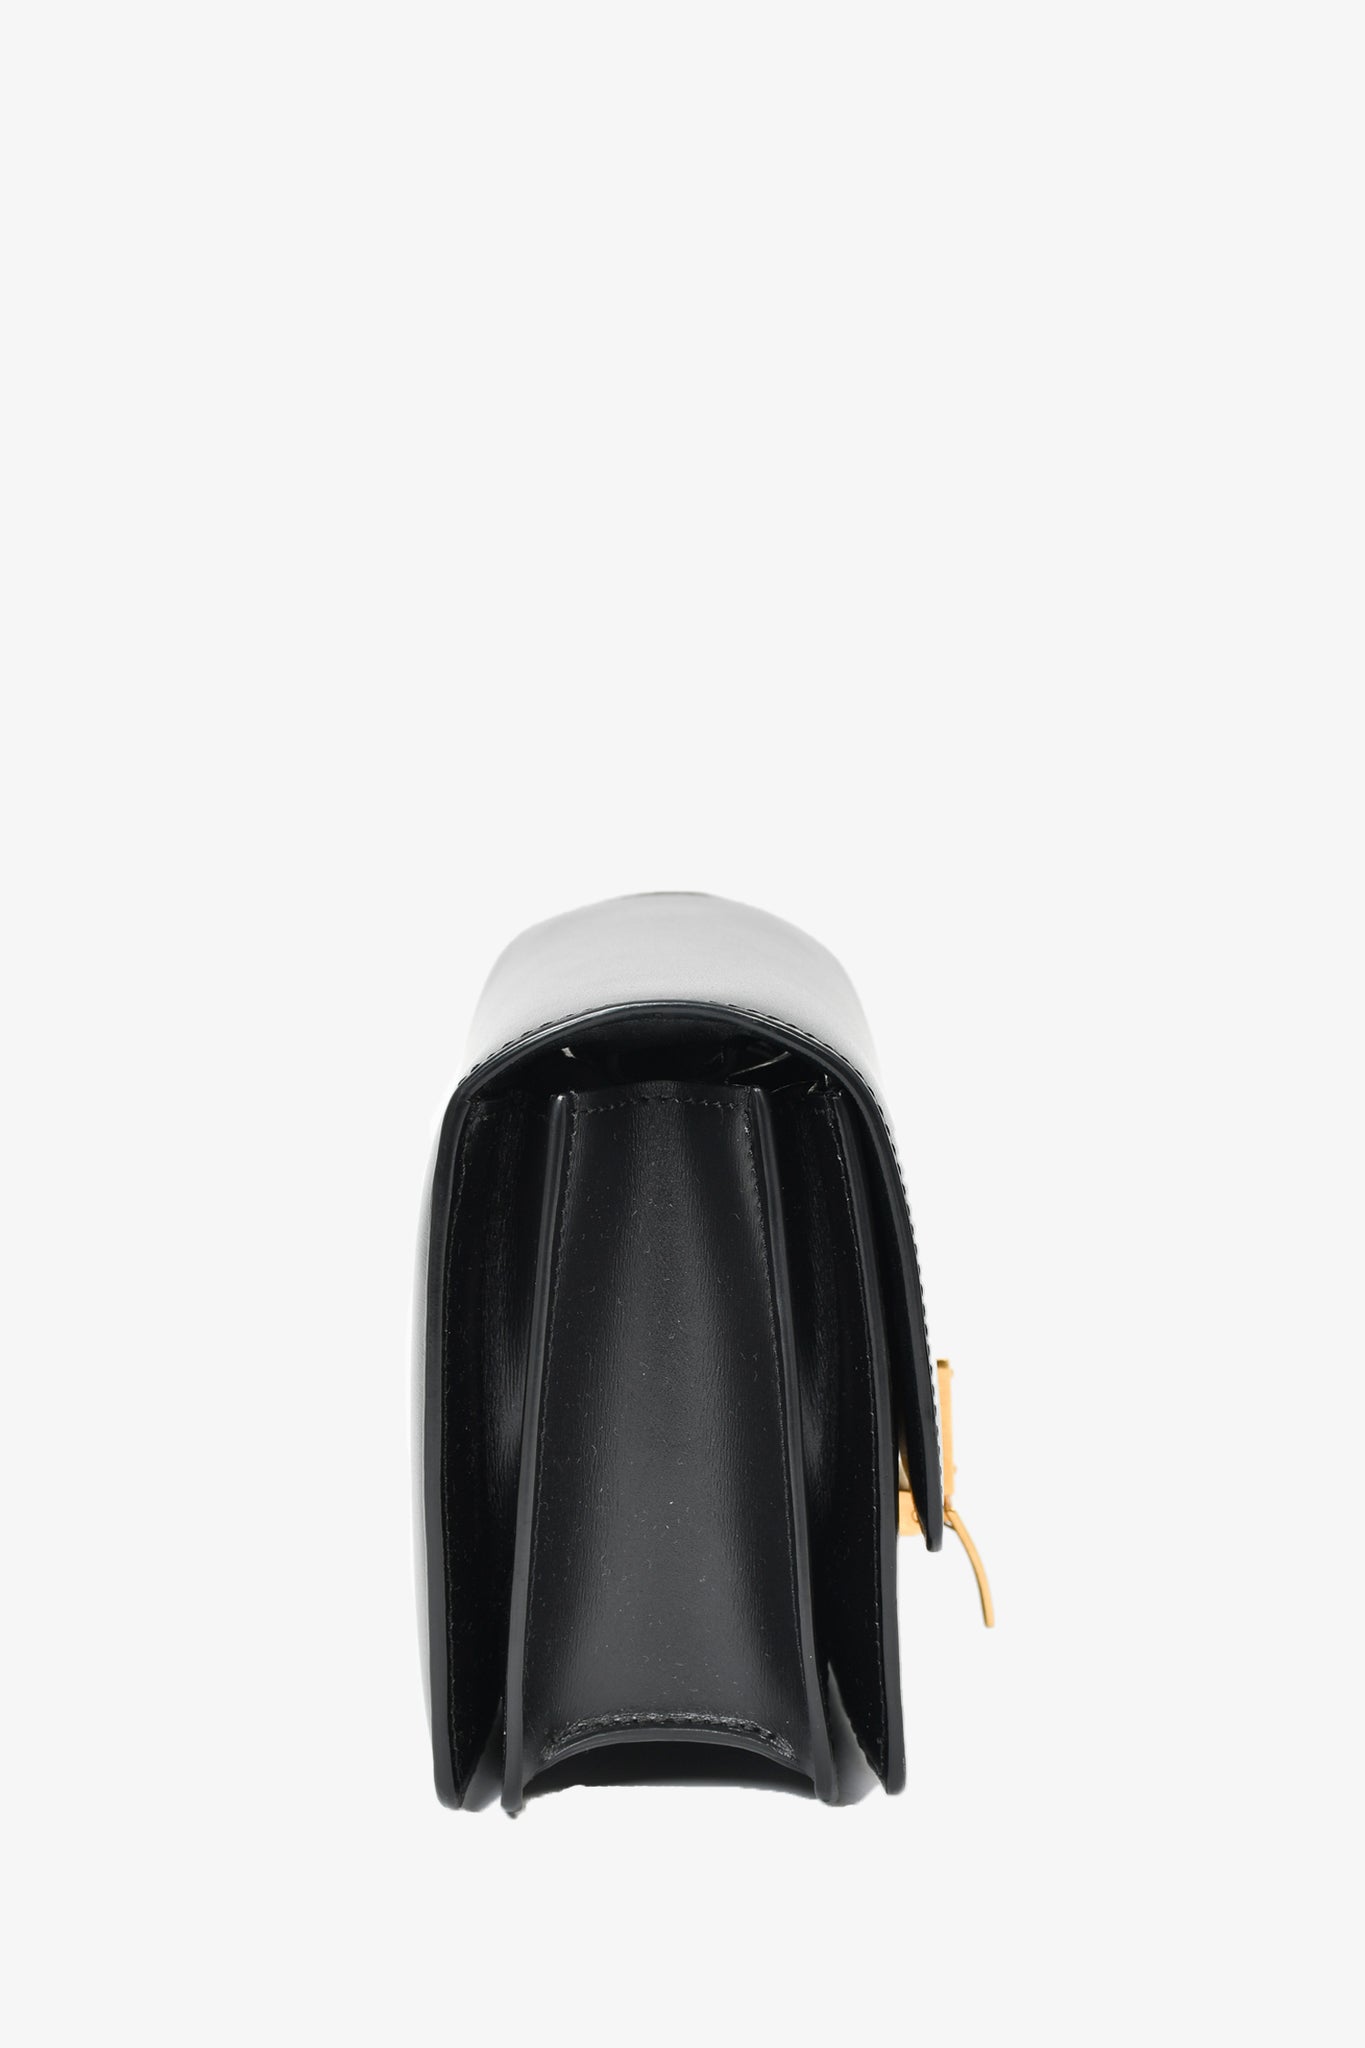 Celine Black Leather Small Box Crossbody Bag